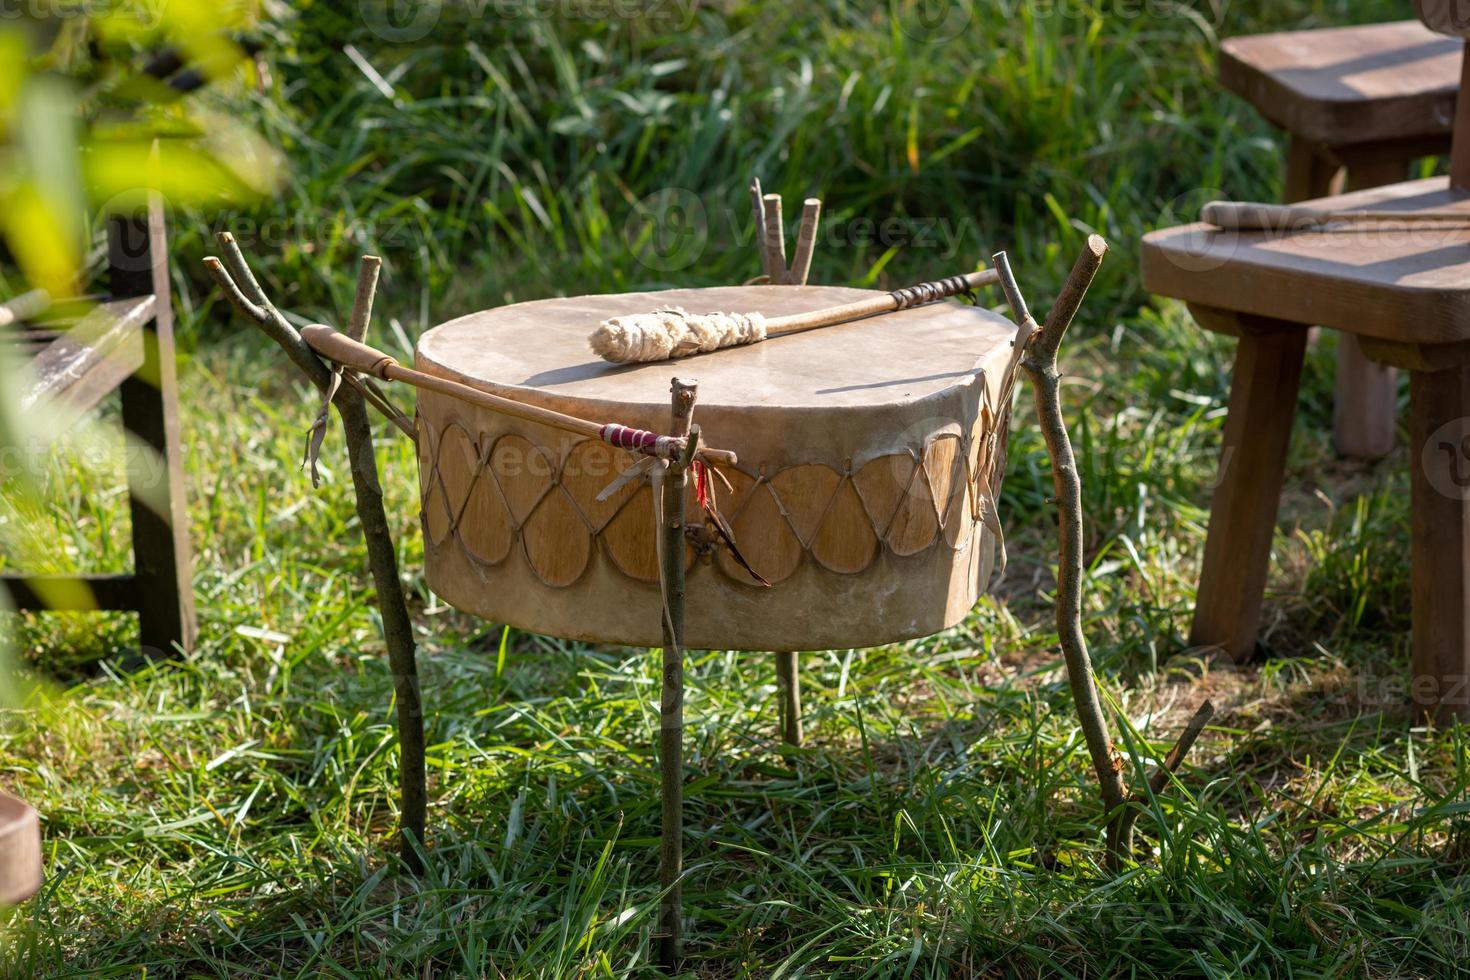 Noord-Amerikaanse Indiase trommel gemaakt van ongelooide huid met vleermuis klaar om te spelen foto